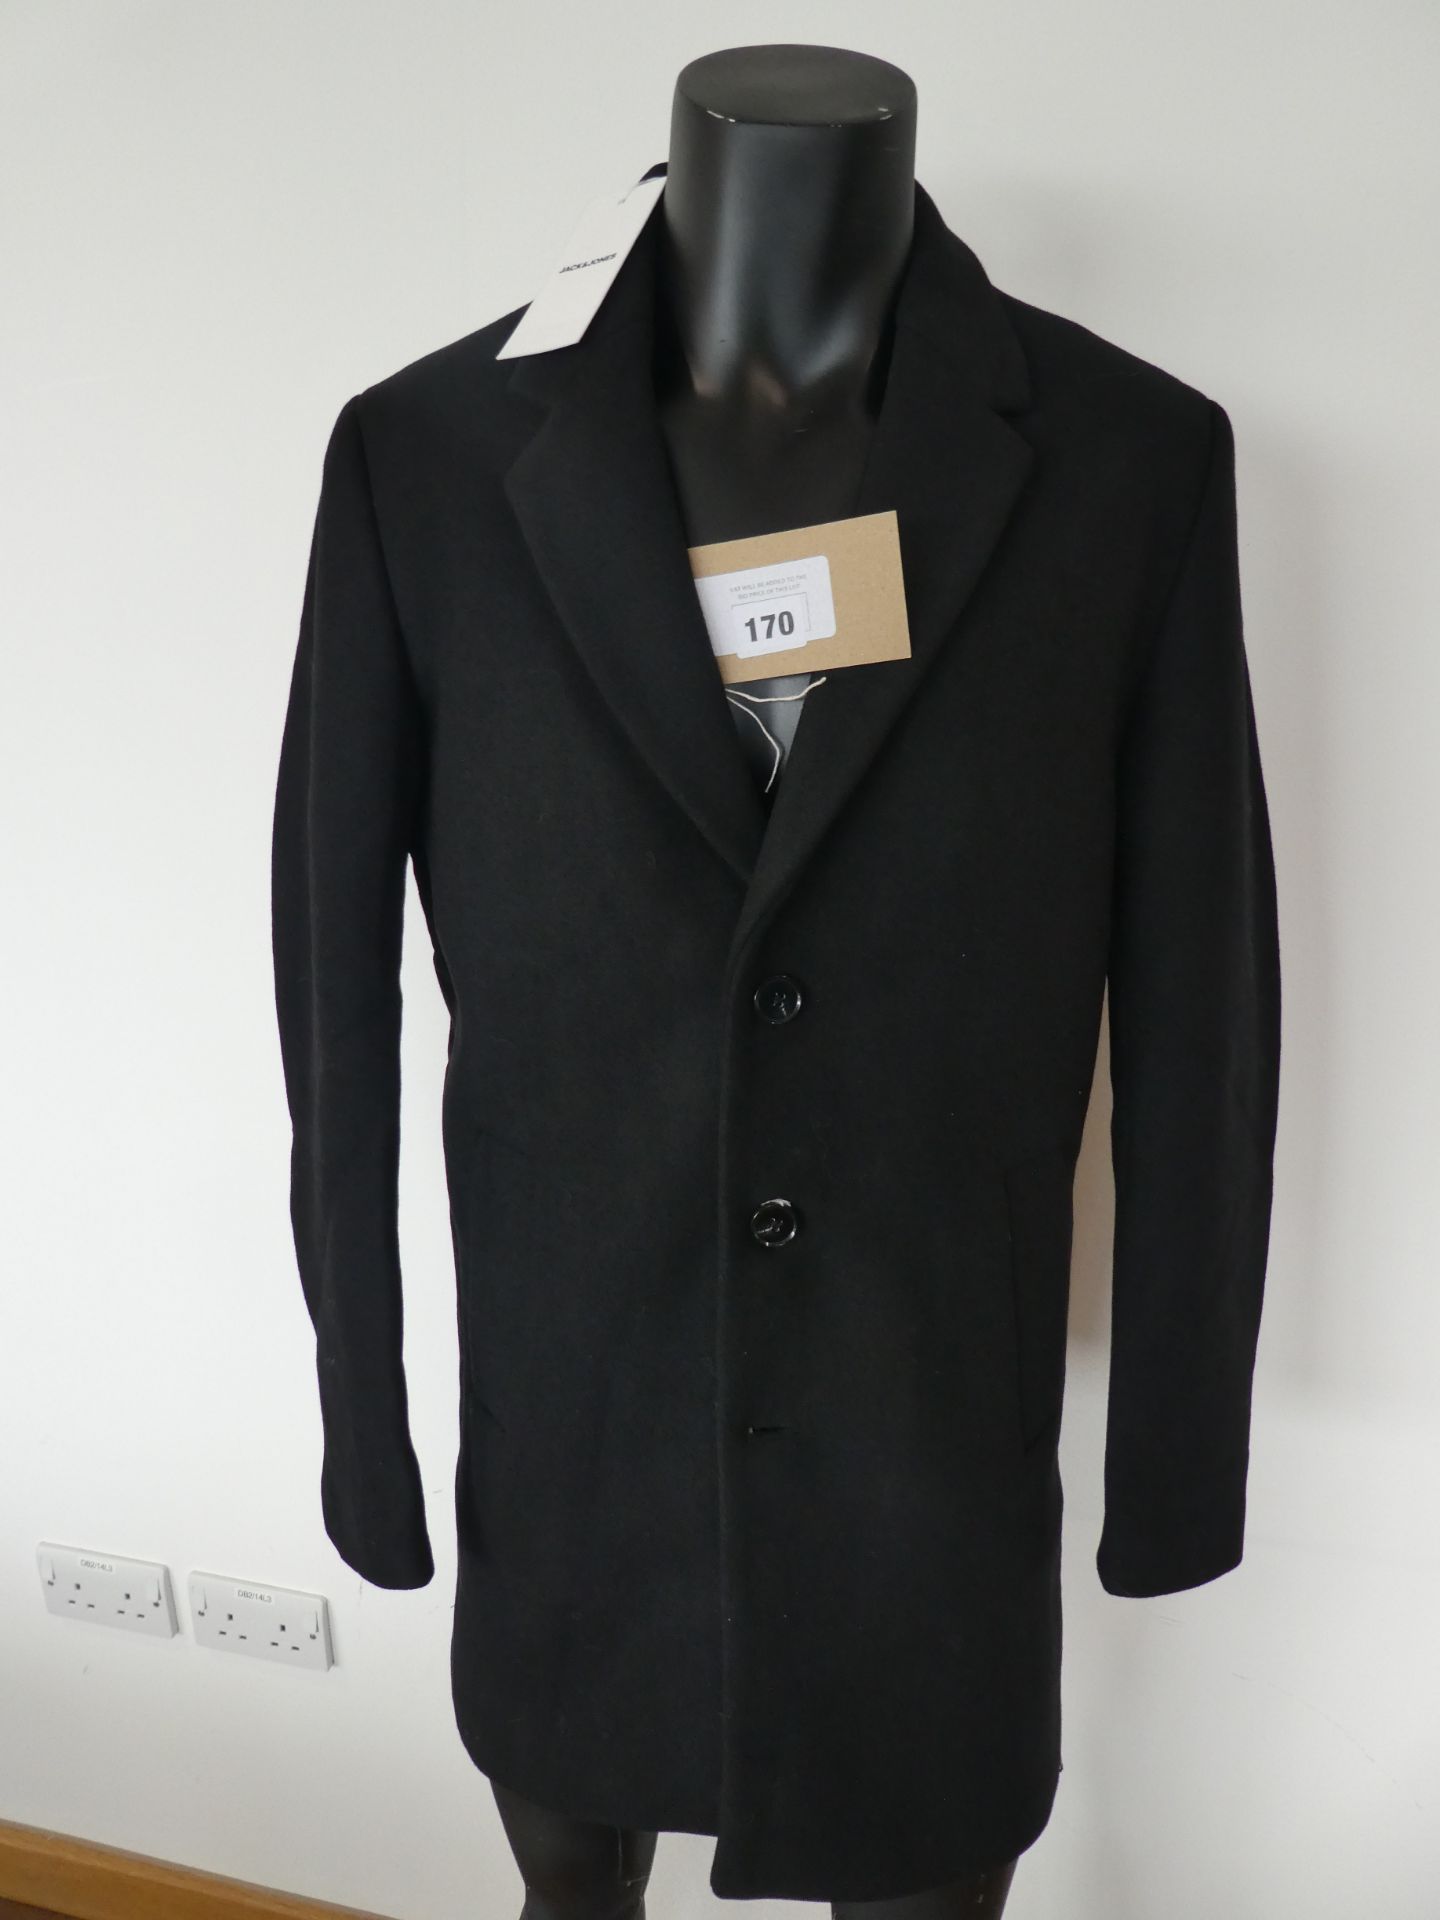 Jack & Jones wool blend coat in black size S